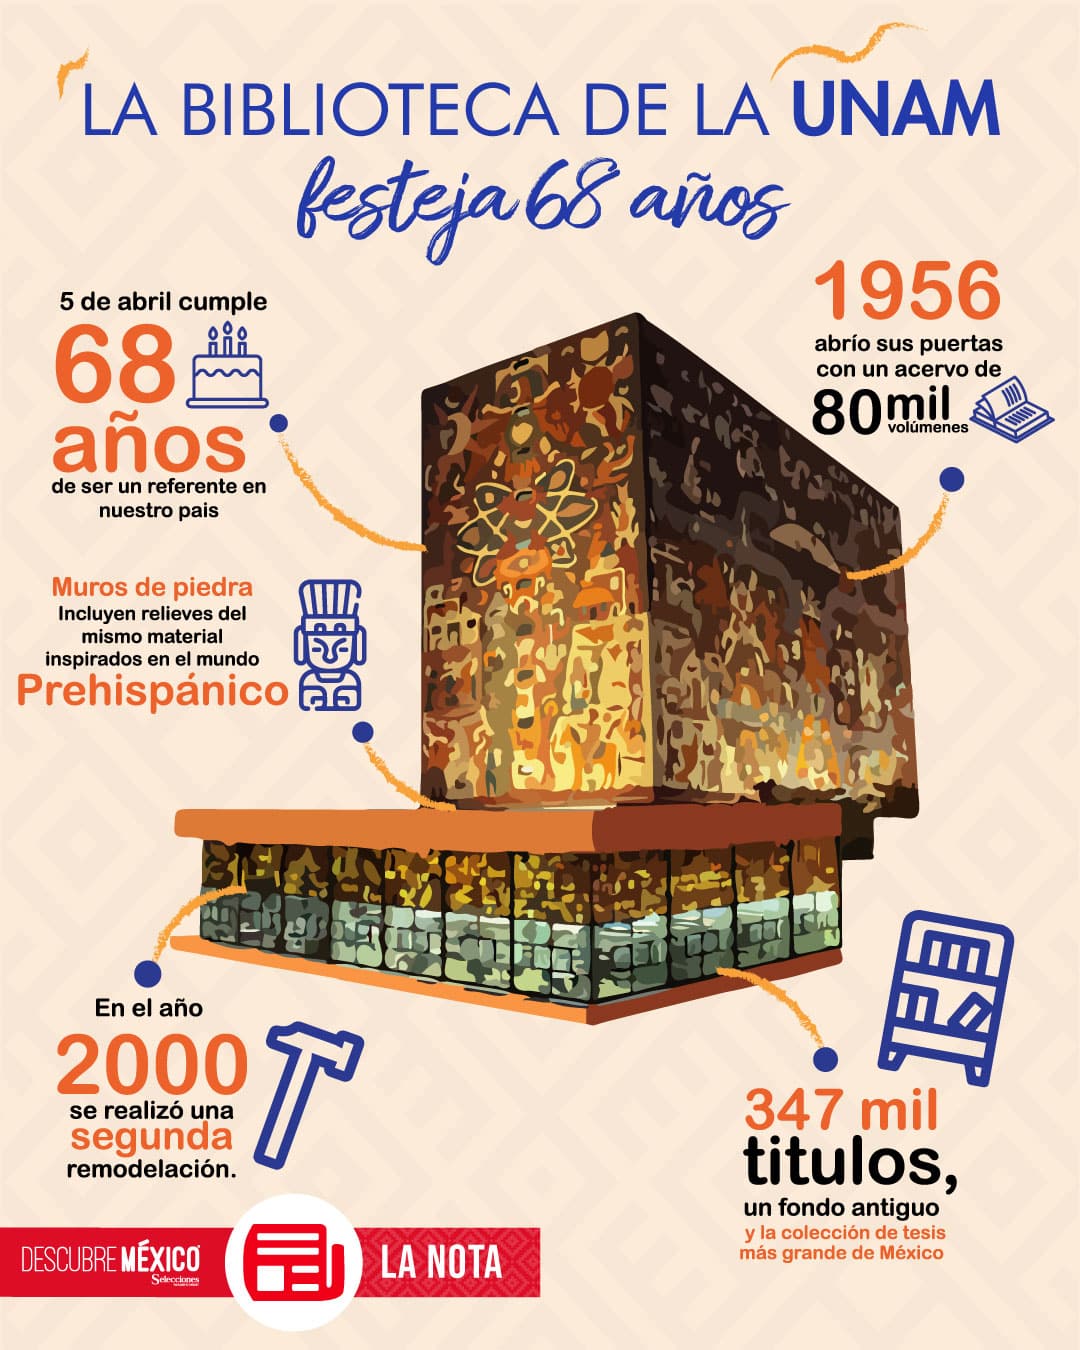 La Biblioteca de la UNAM festeja 68 años